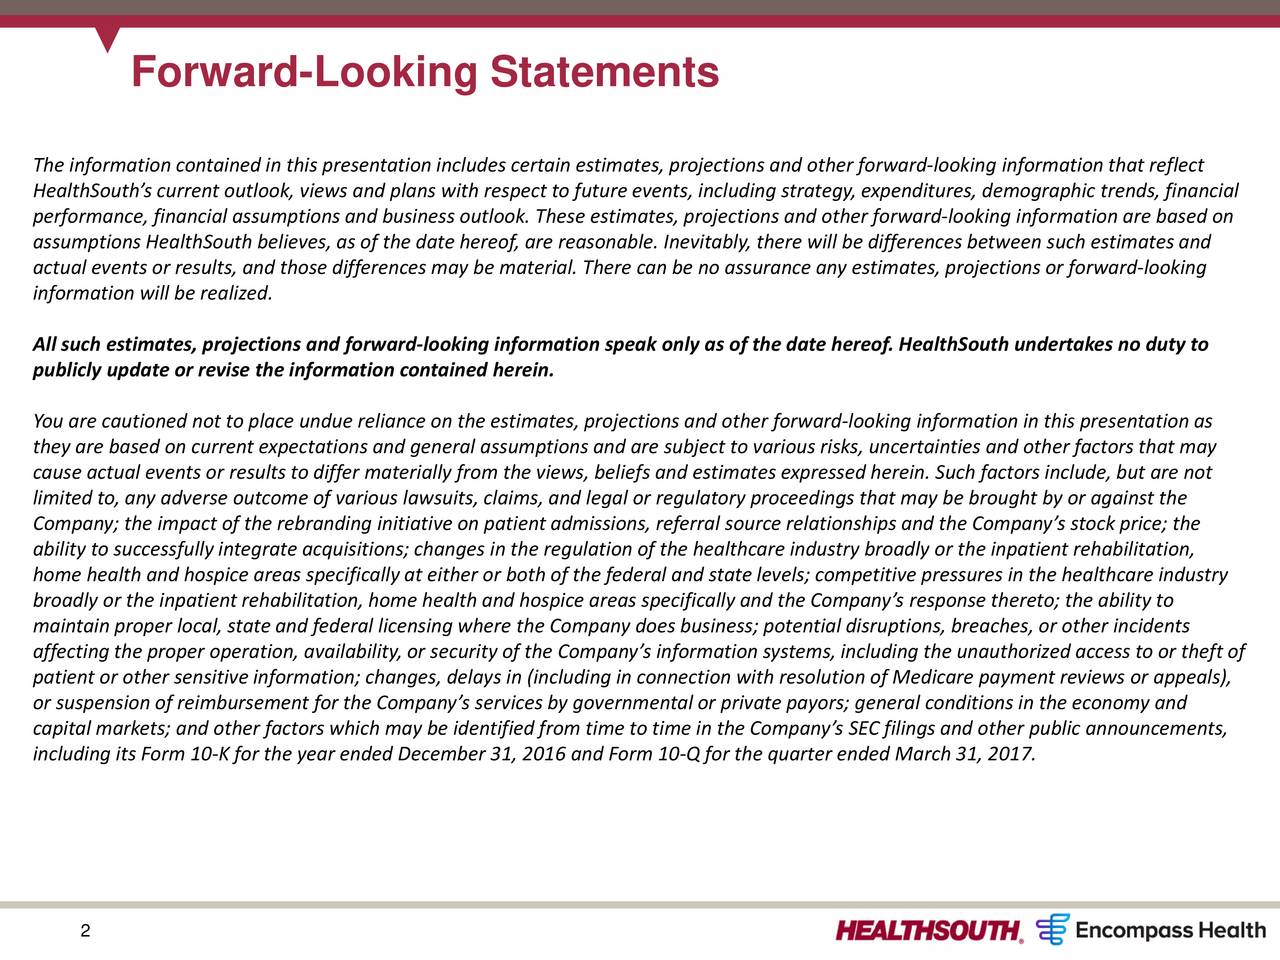  Forward-Looking Statements